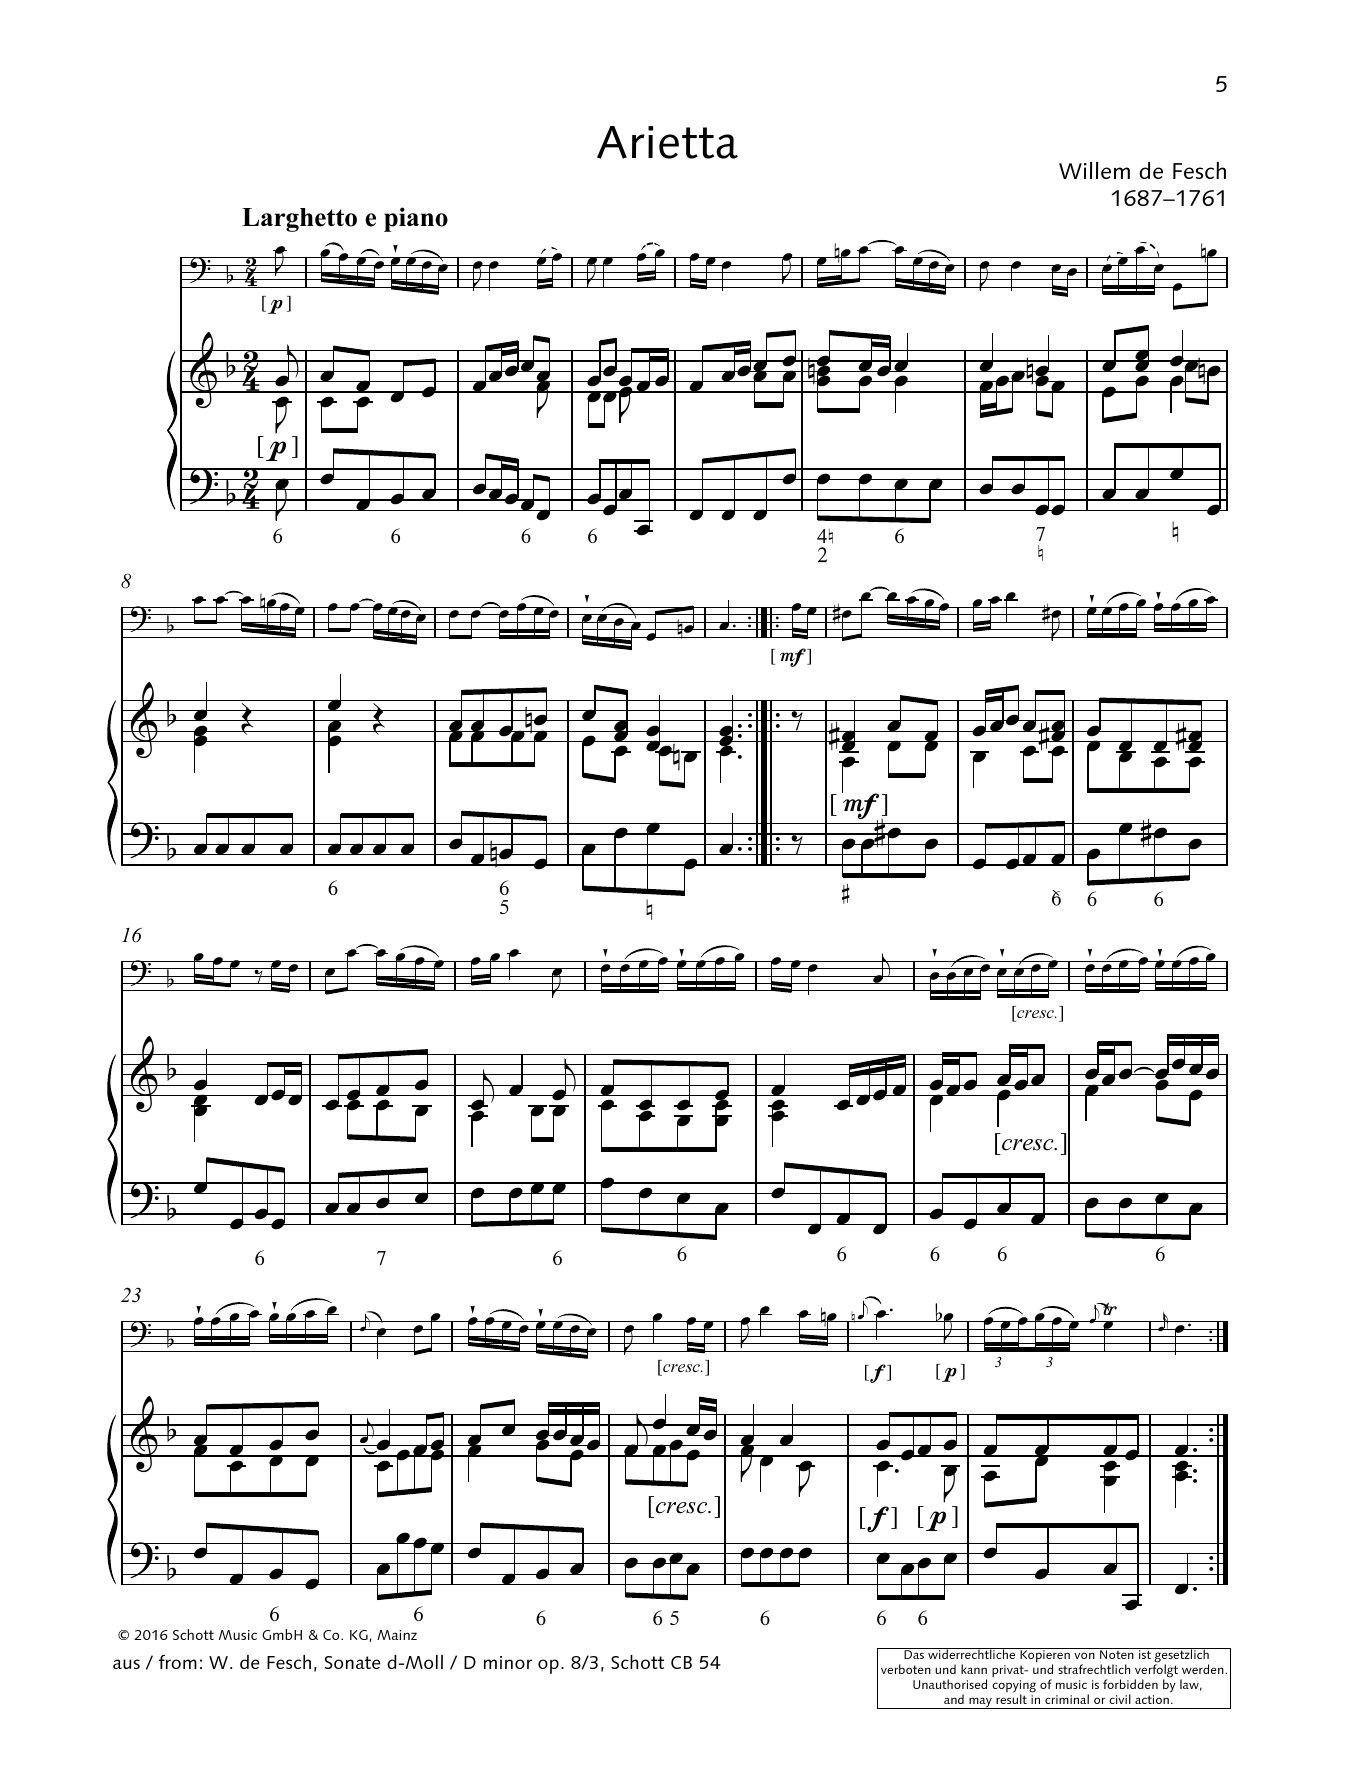 Willem de Fesch Arietta Sheet Music Notes & Chords for String Solo - Download or Print PDF